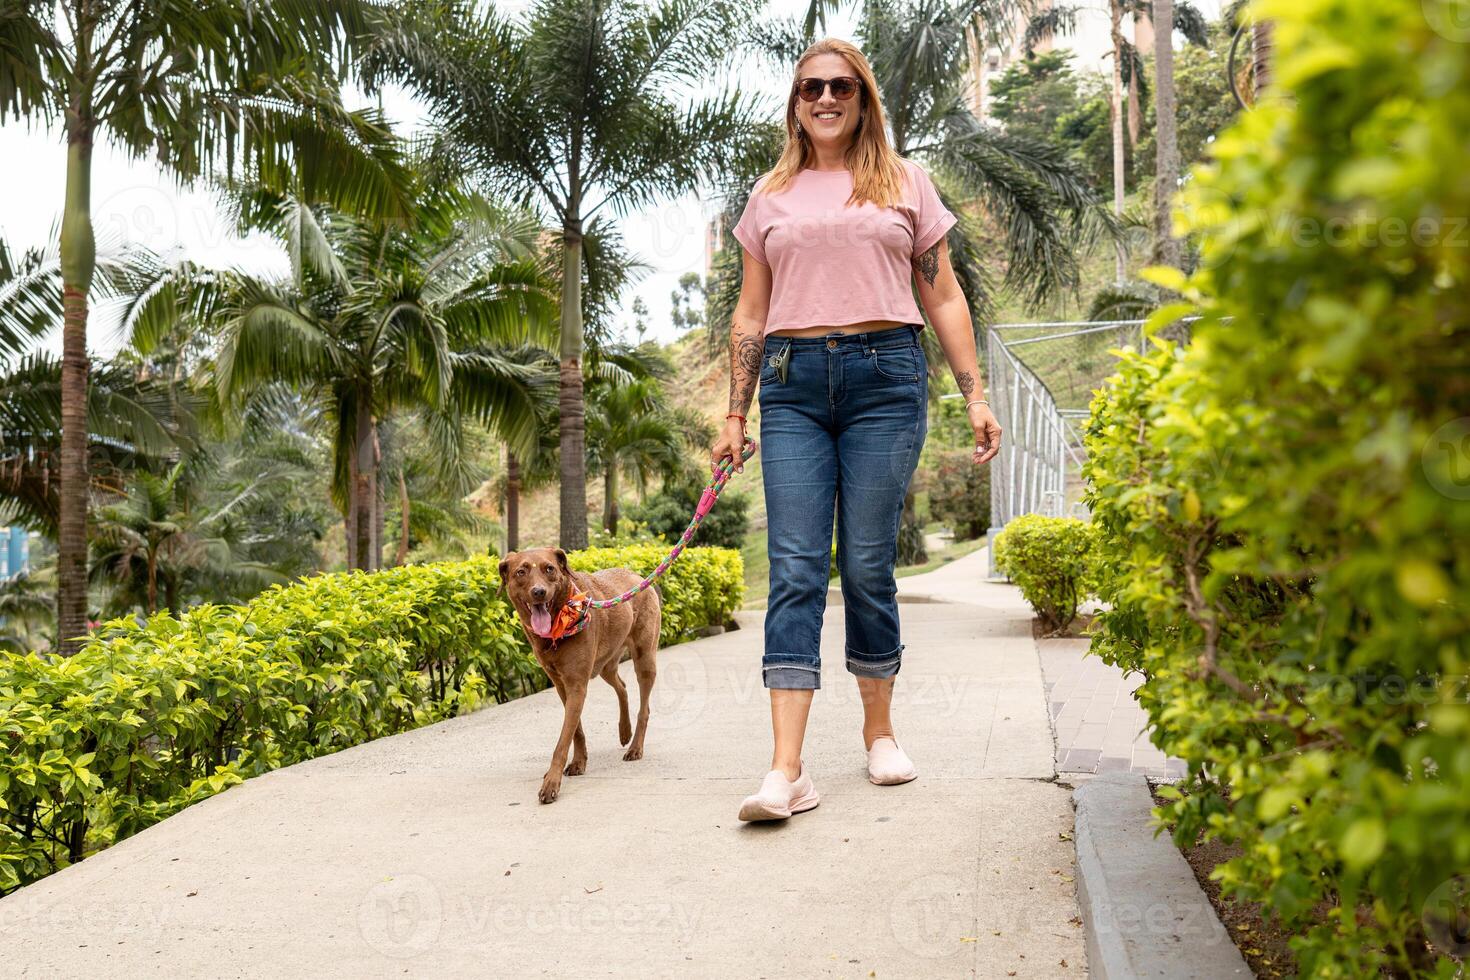 A cheerful woman walks her dog in a tropical urban park. photo